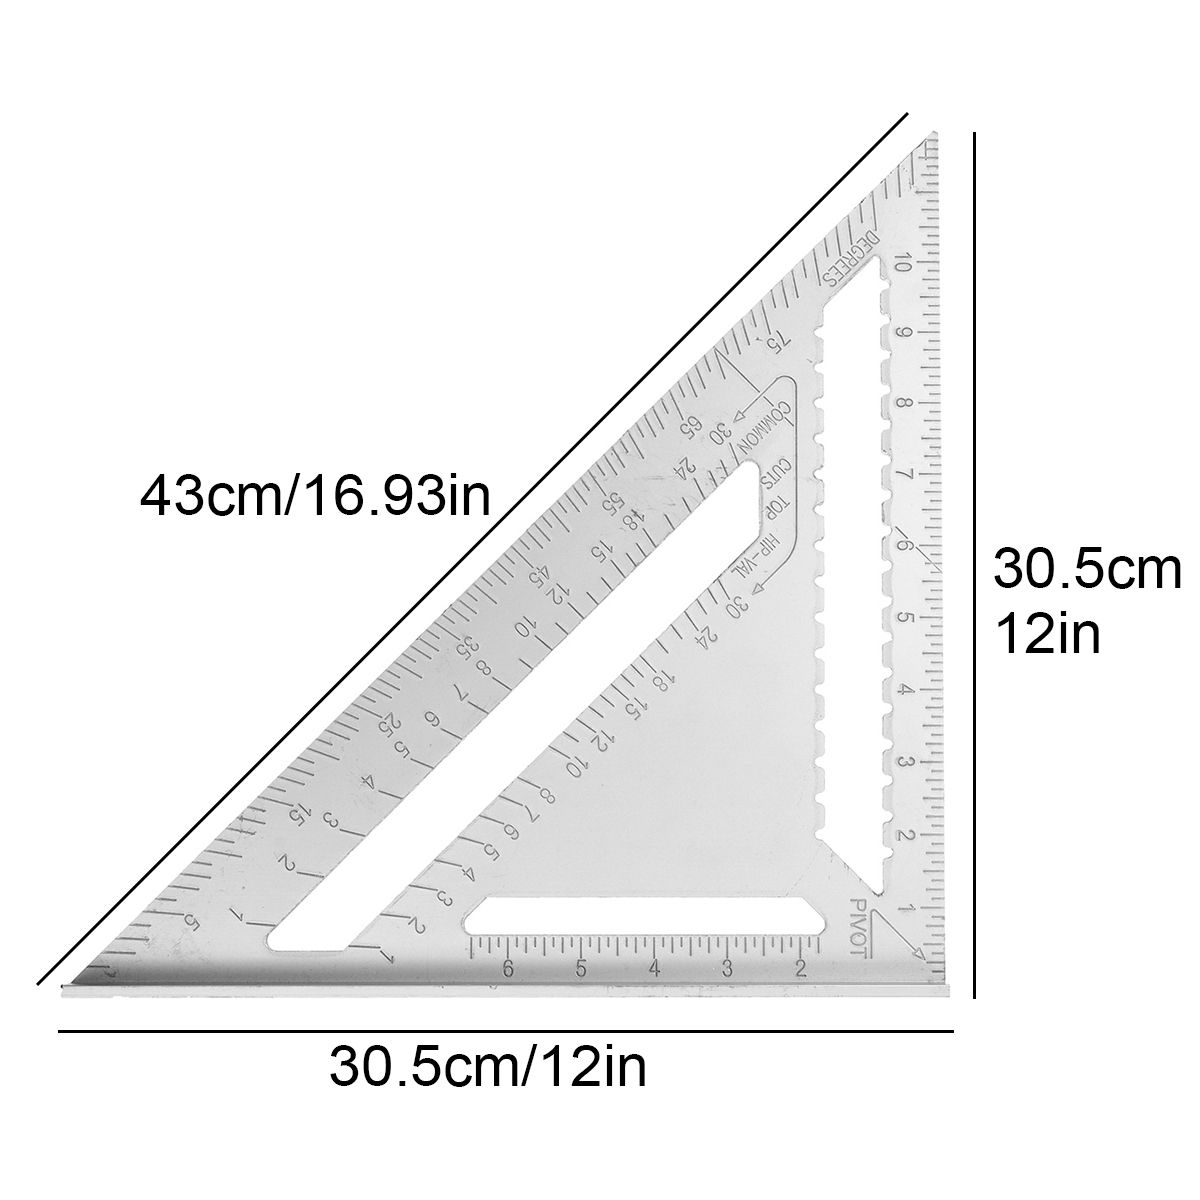 7quot12quot-Aluminum-Alloy-Triangle-Ruler-Metric-Imperial-Meter-Square-Protractor-Line-Ruler-1748549